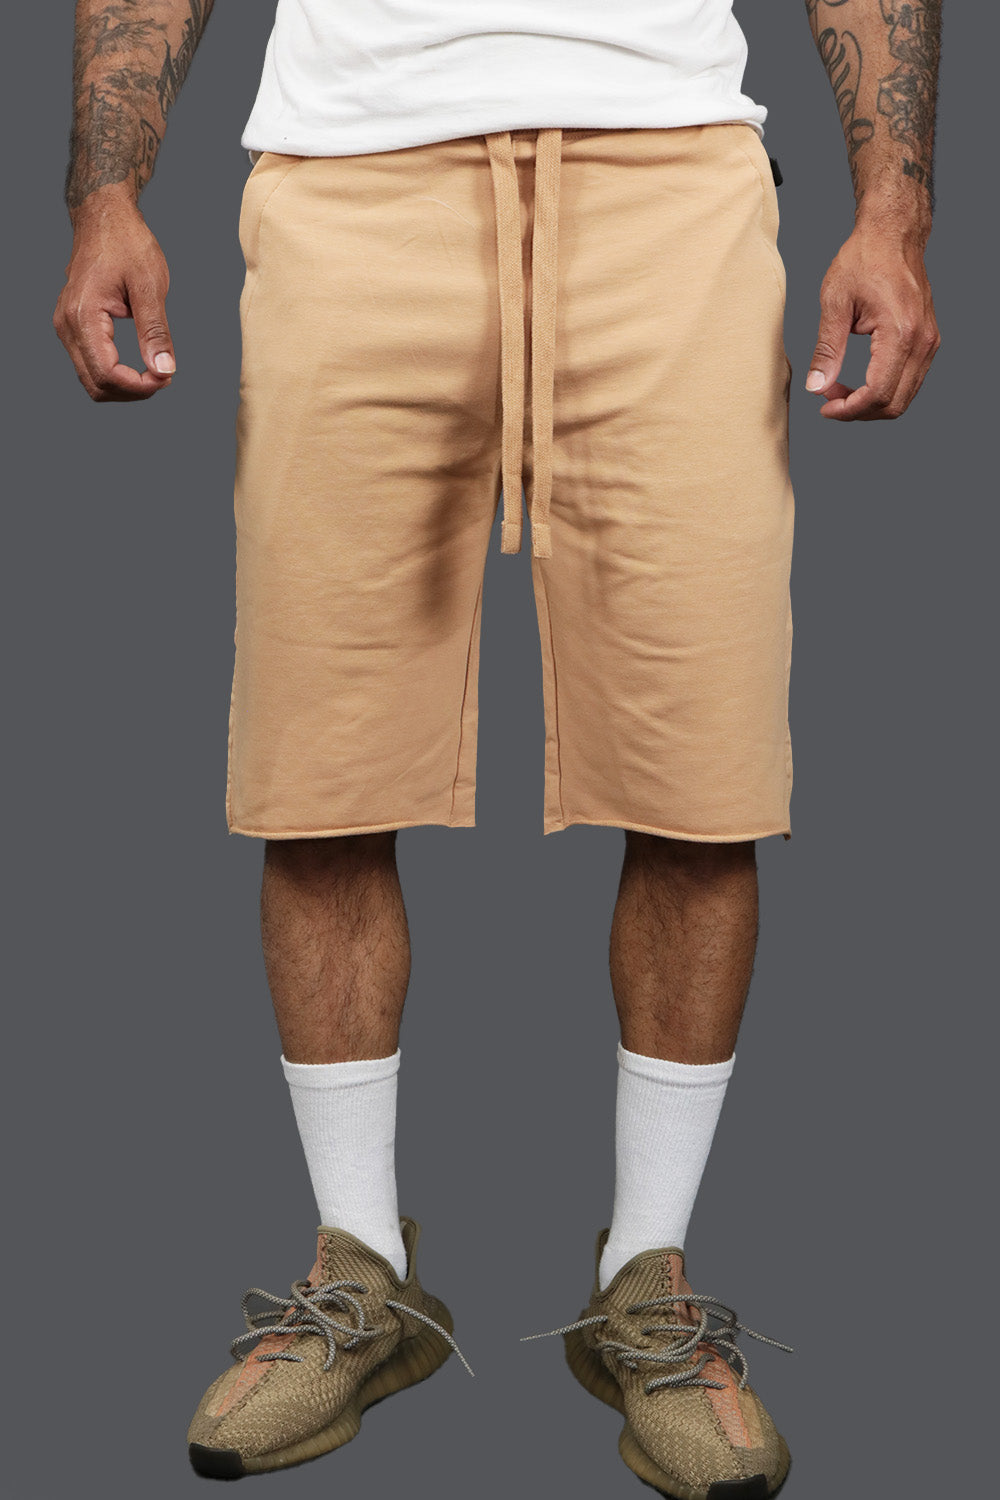 The Men’s Fleece Shorts with Zipper Pocket | Jordan Craig Clay